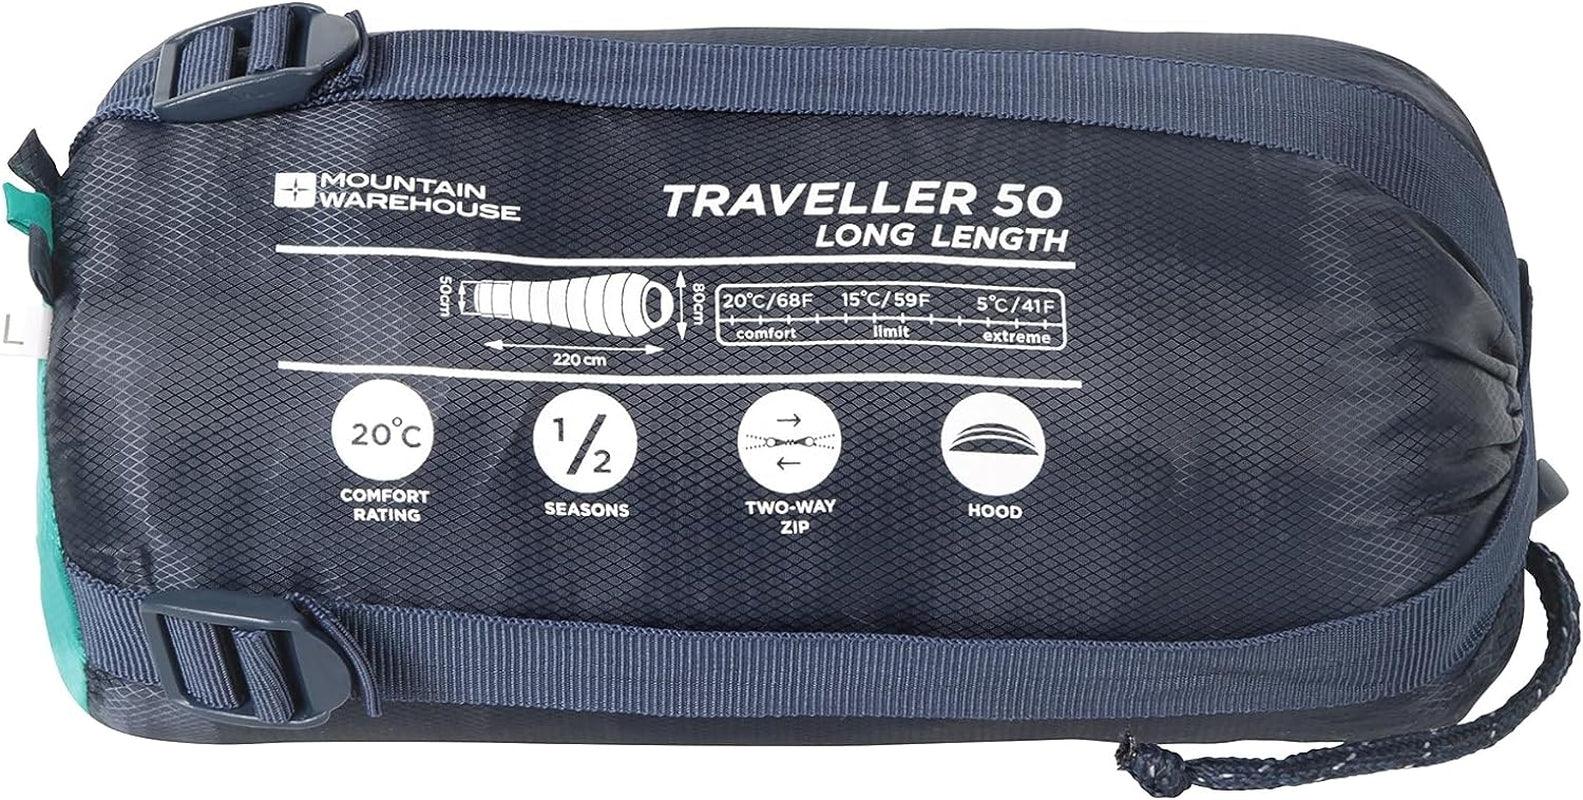 Traveler 50 Sleeping Bag - Mummy Shape, 2-Season - Click